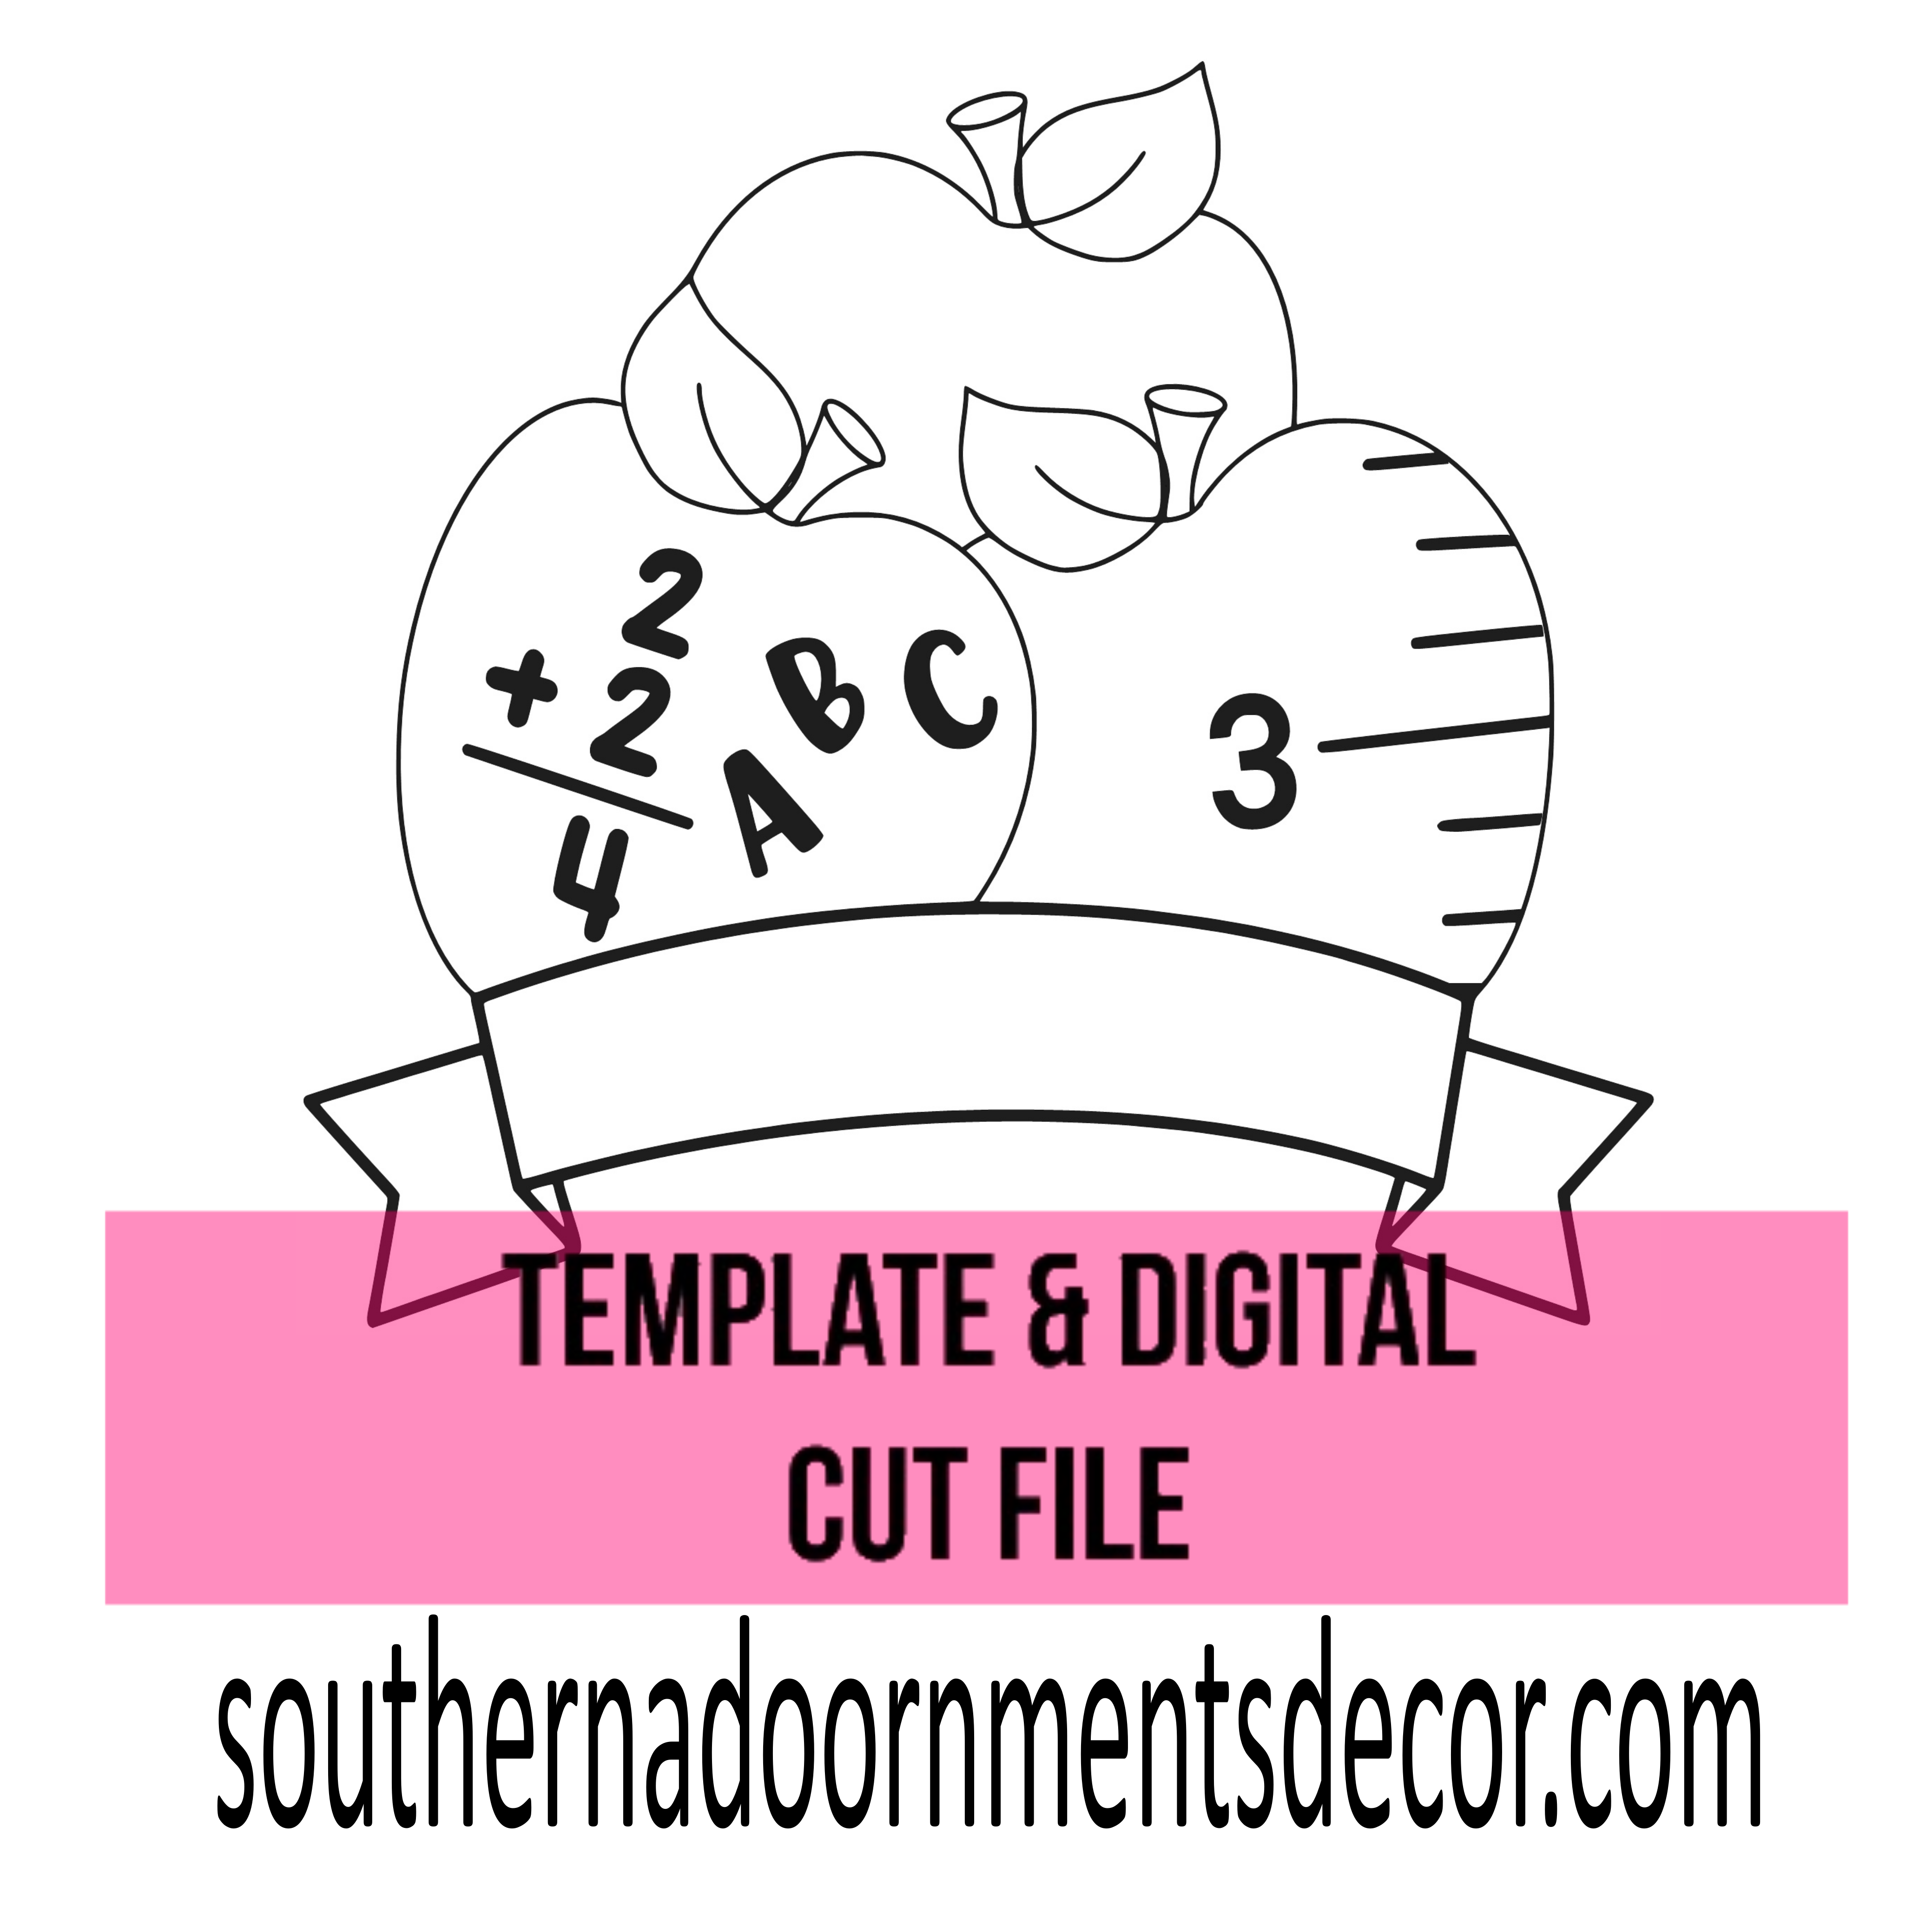 School Apples Template & Digital Cut File